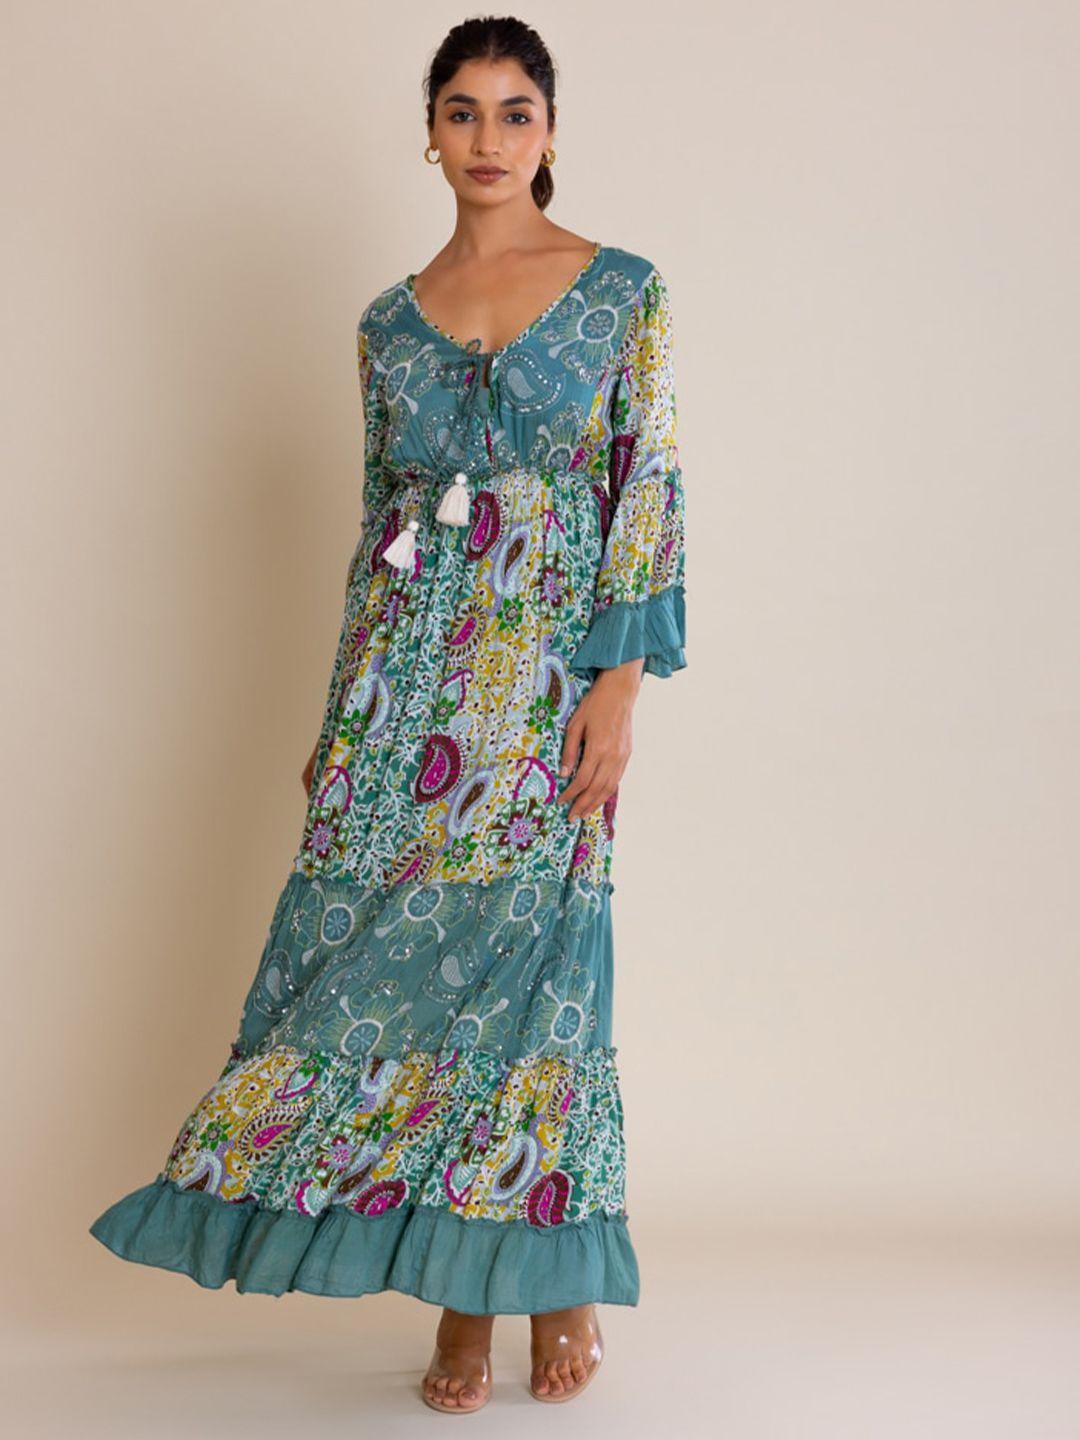 label reyya floral printed bell sleeves embellished fit & flare maxi dress